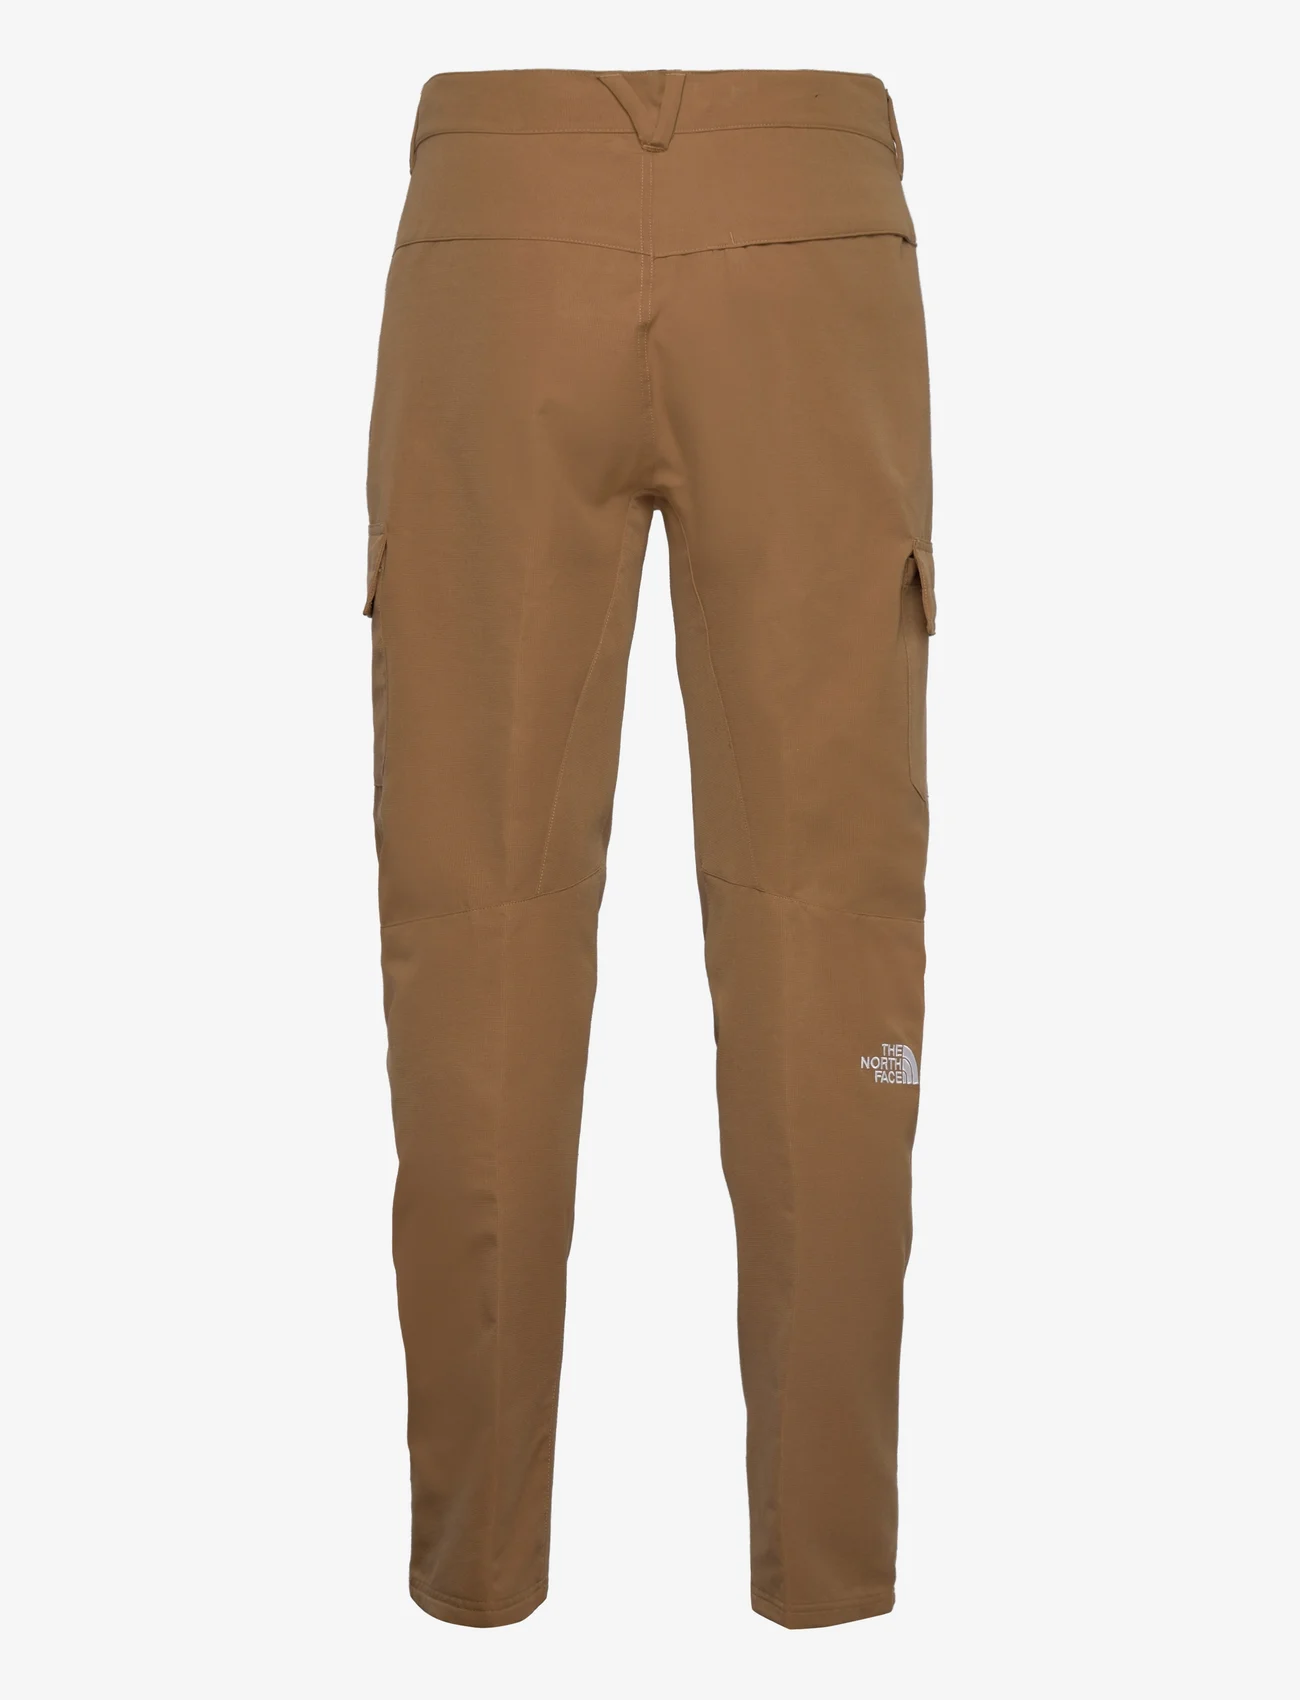 The North Face - M HORIZON PANT - EU - spodnie turystyczne - utility brown - 1